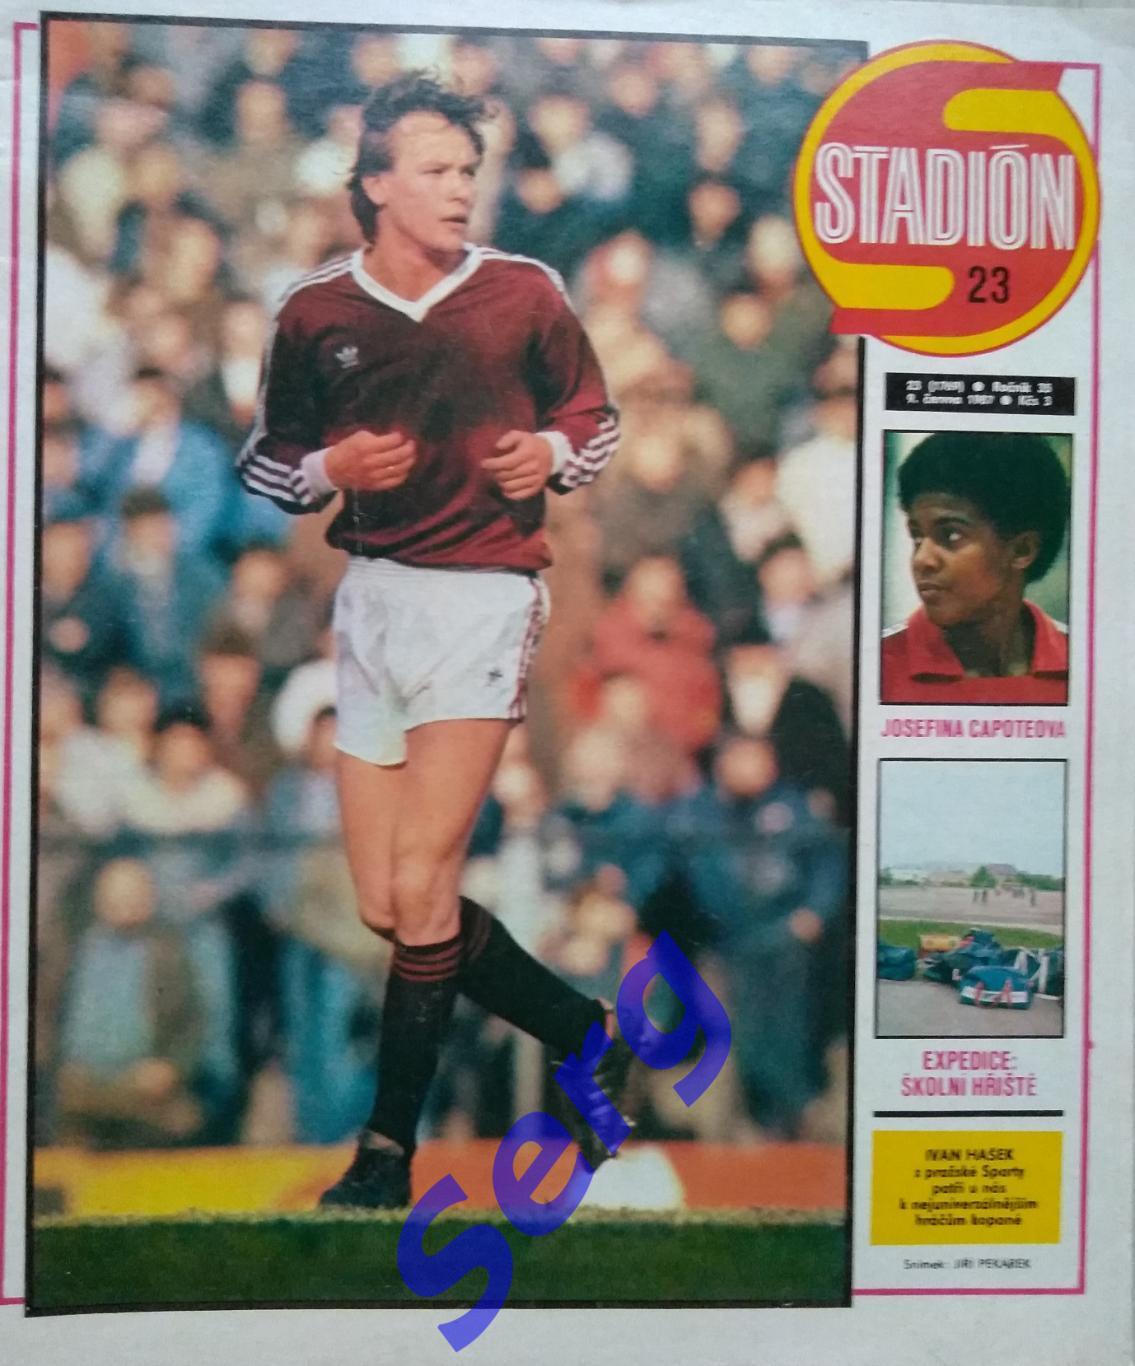 Журнал Стадион (Stadion) №23 1987 год